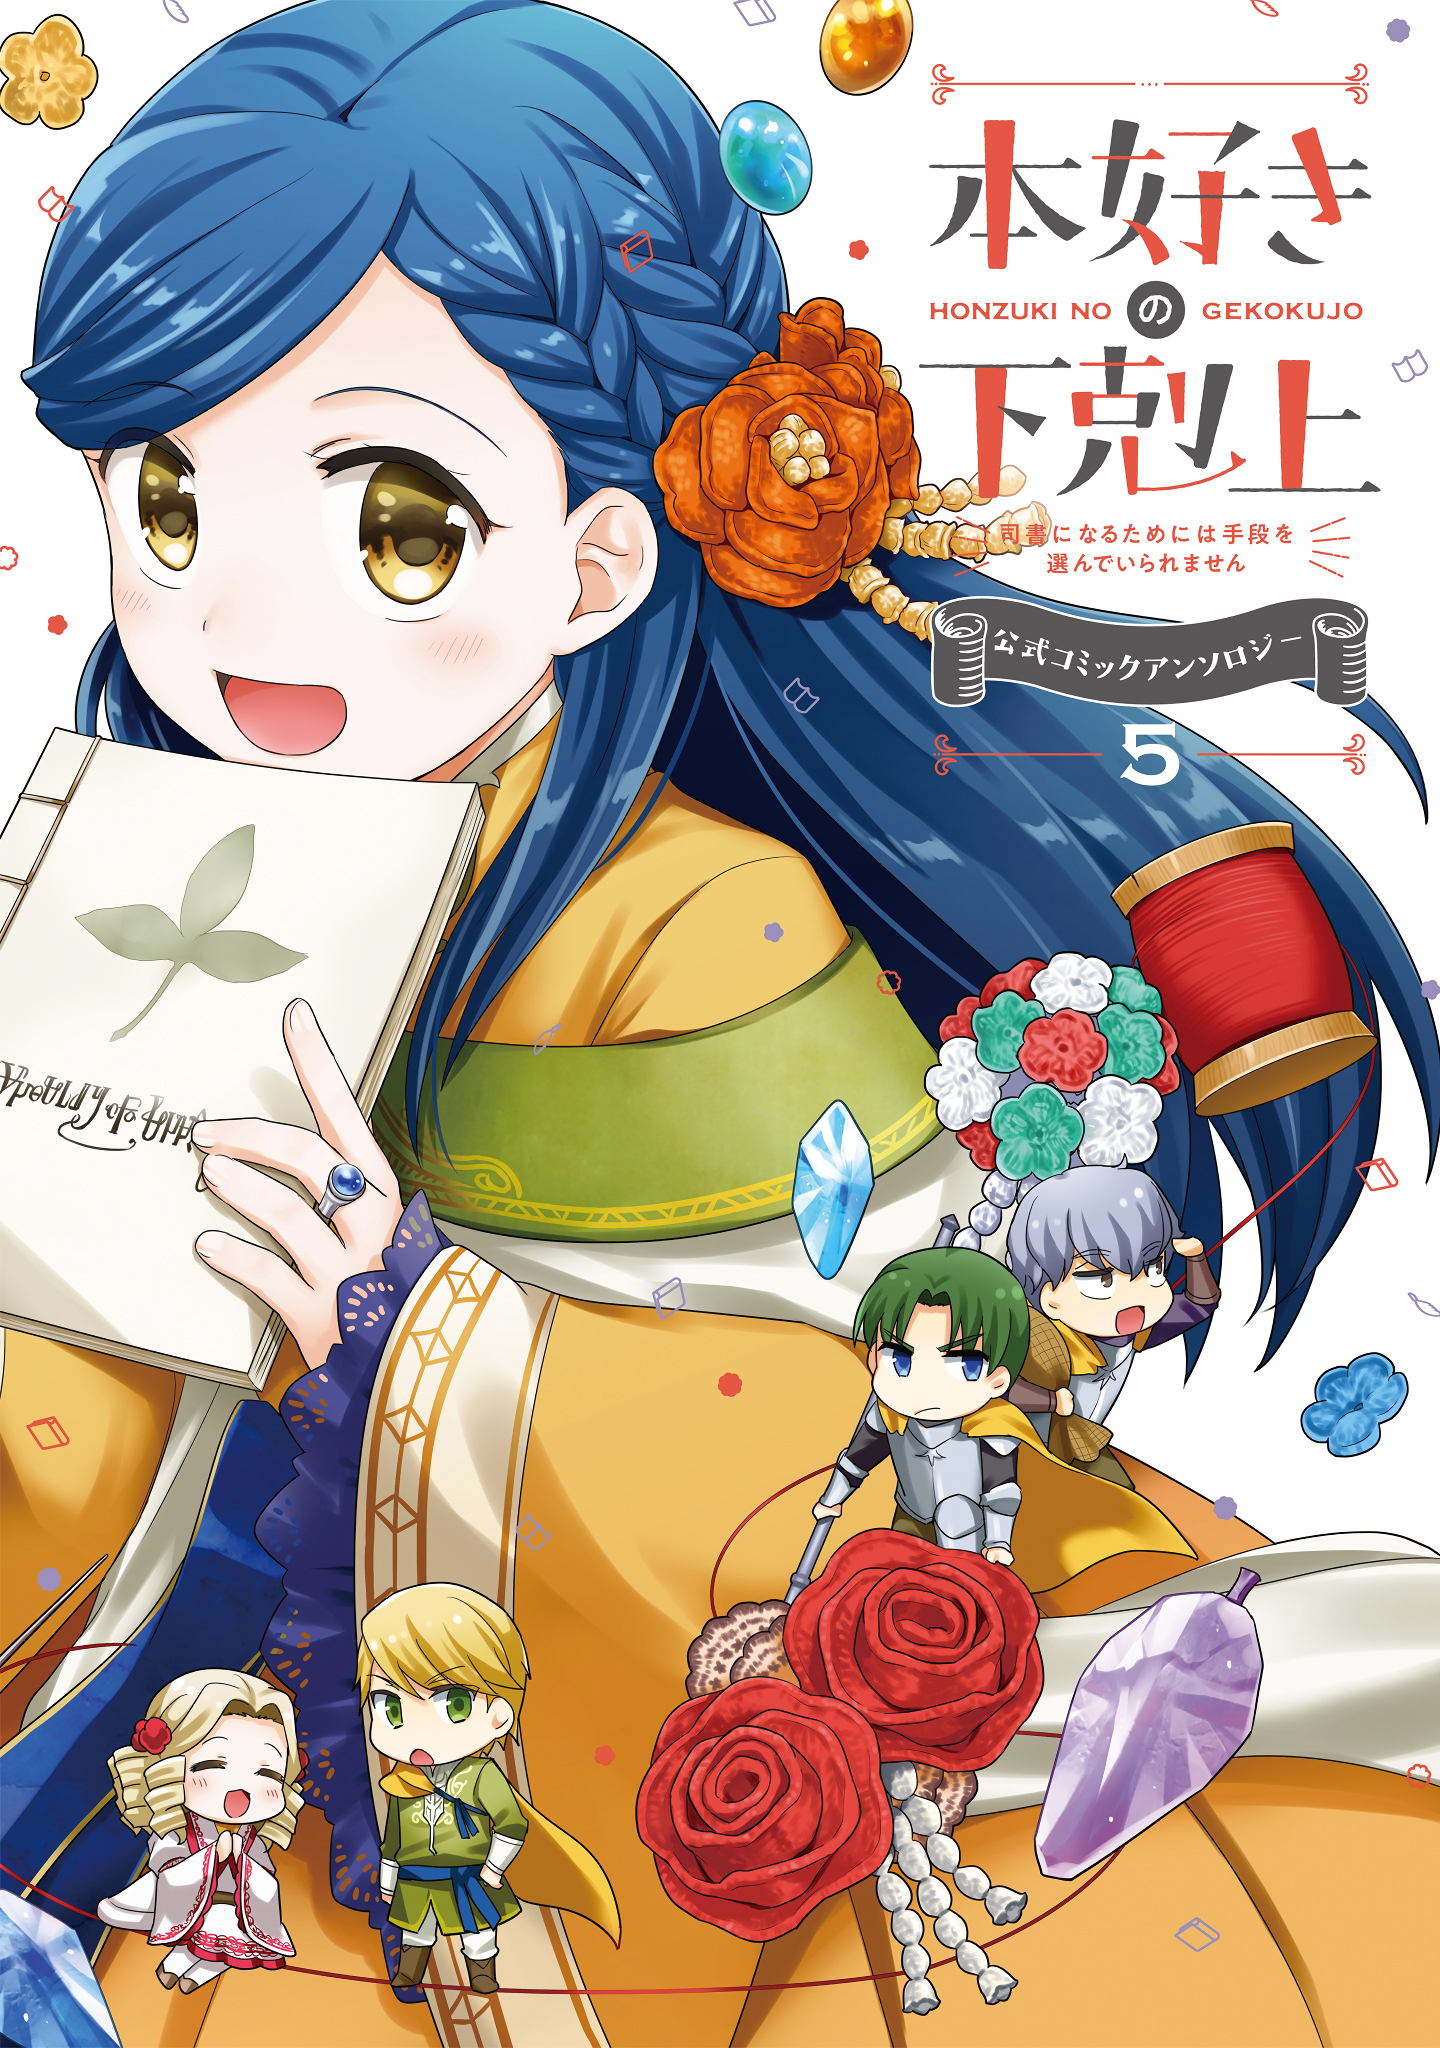 Honzuki no Gekokujo Part 2 - Manga Version - Vol. 4